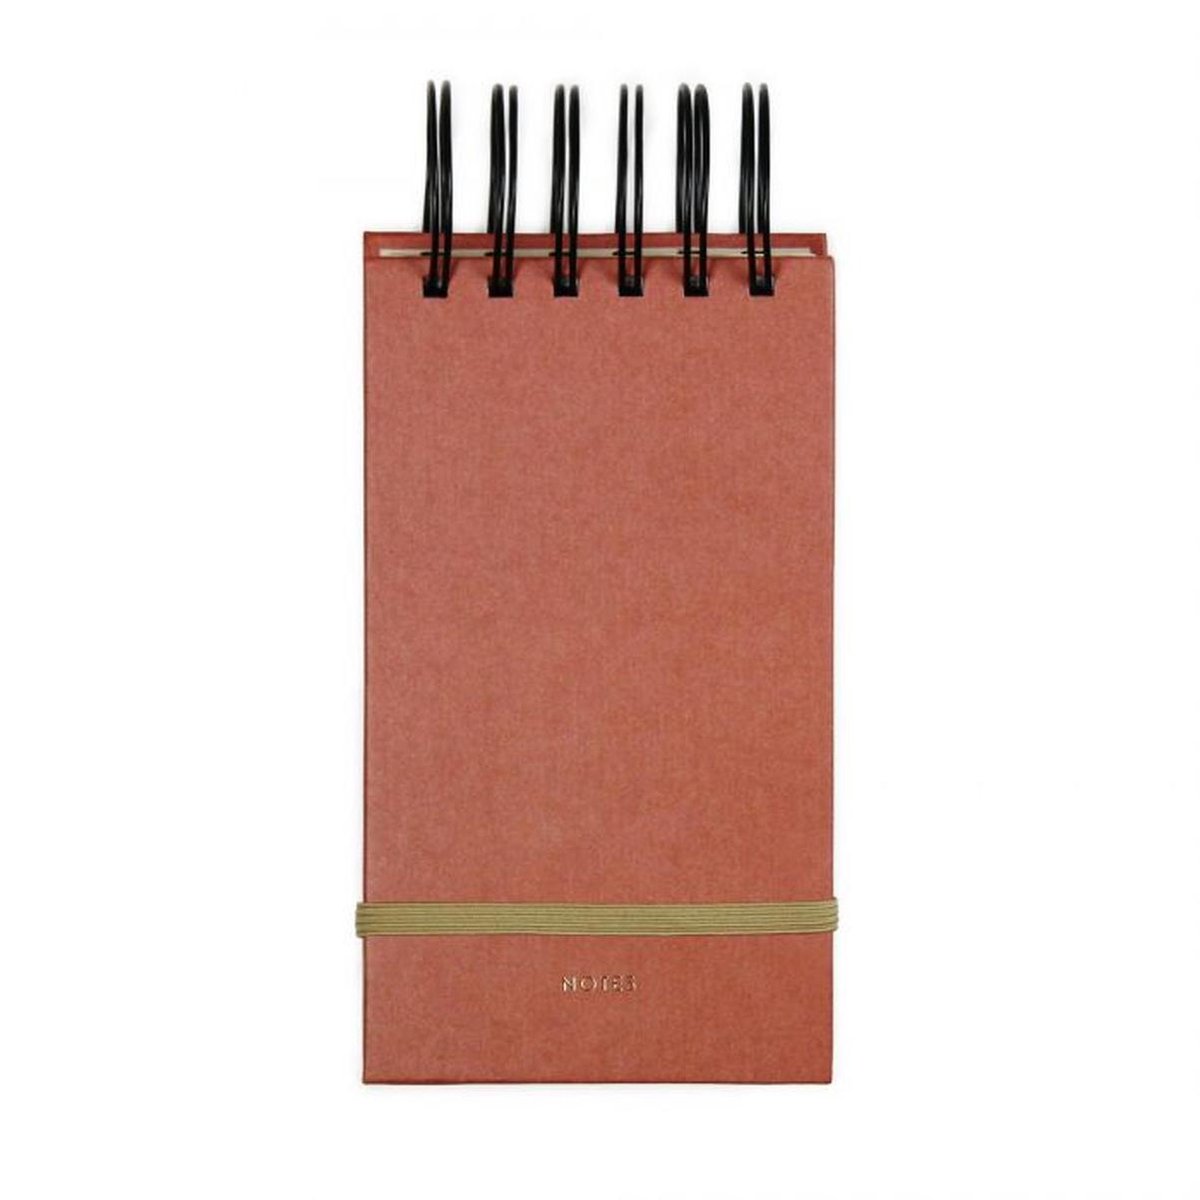 Notepad Small - Brick Red